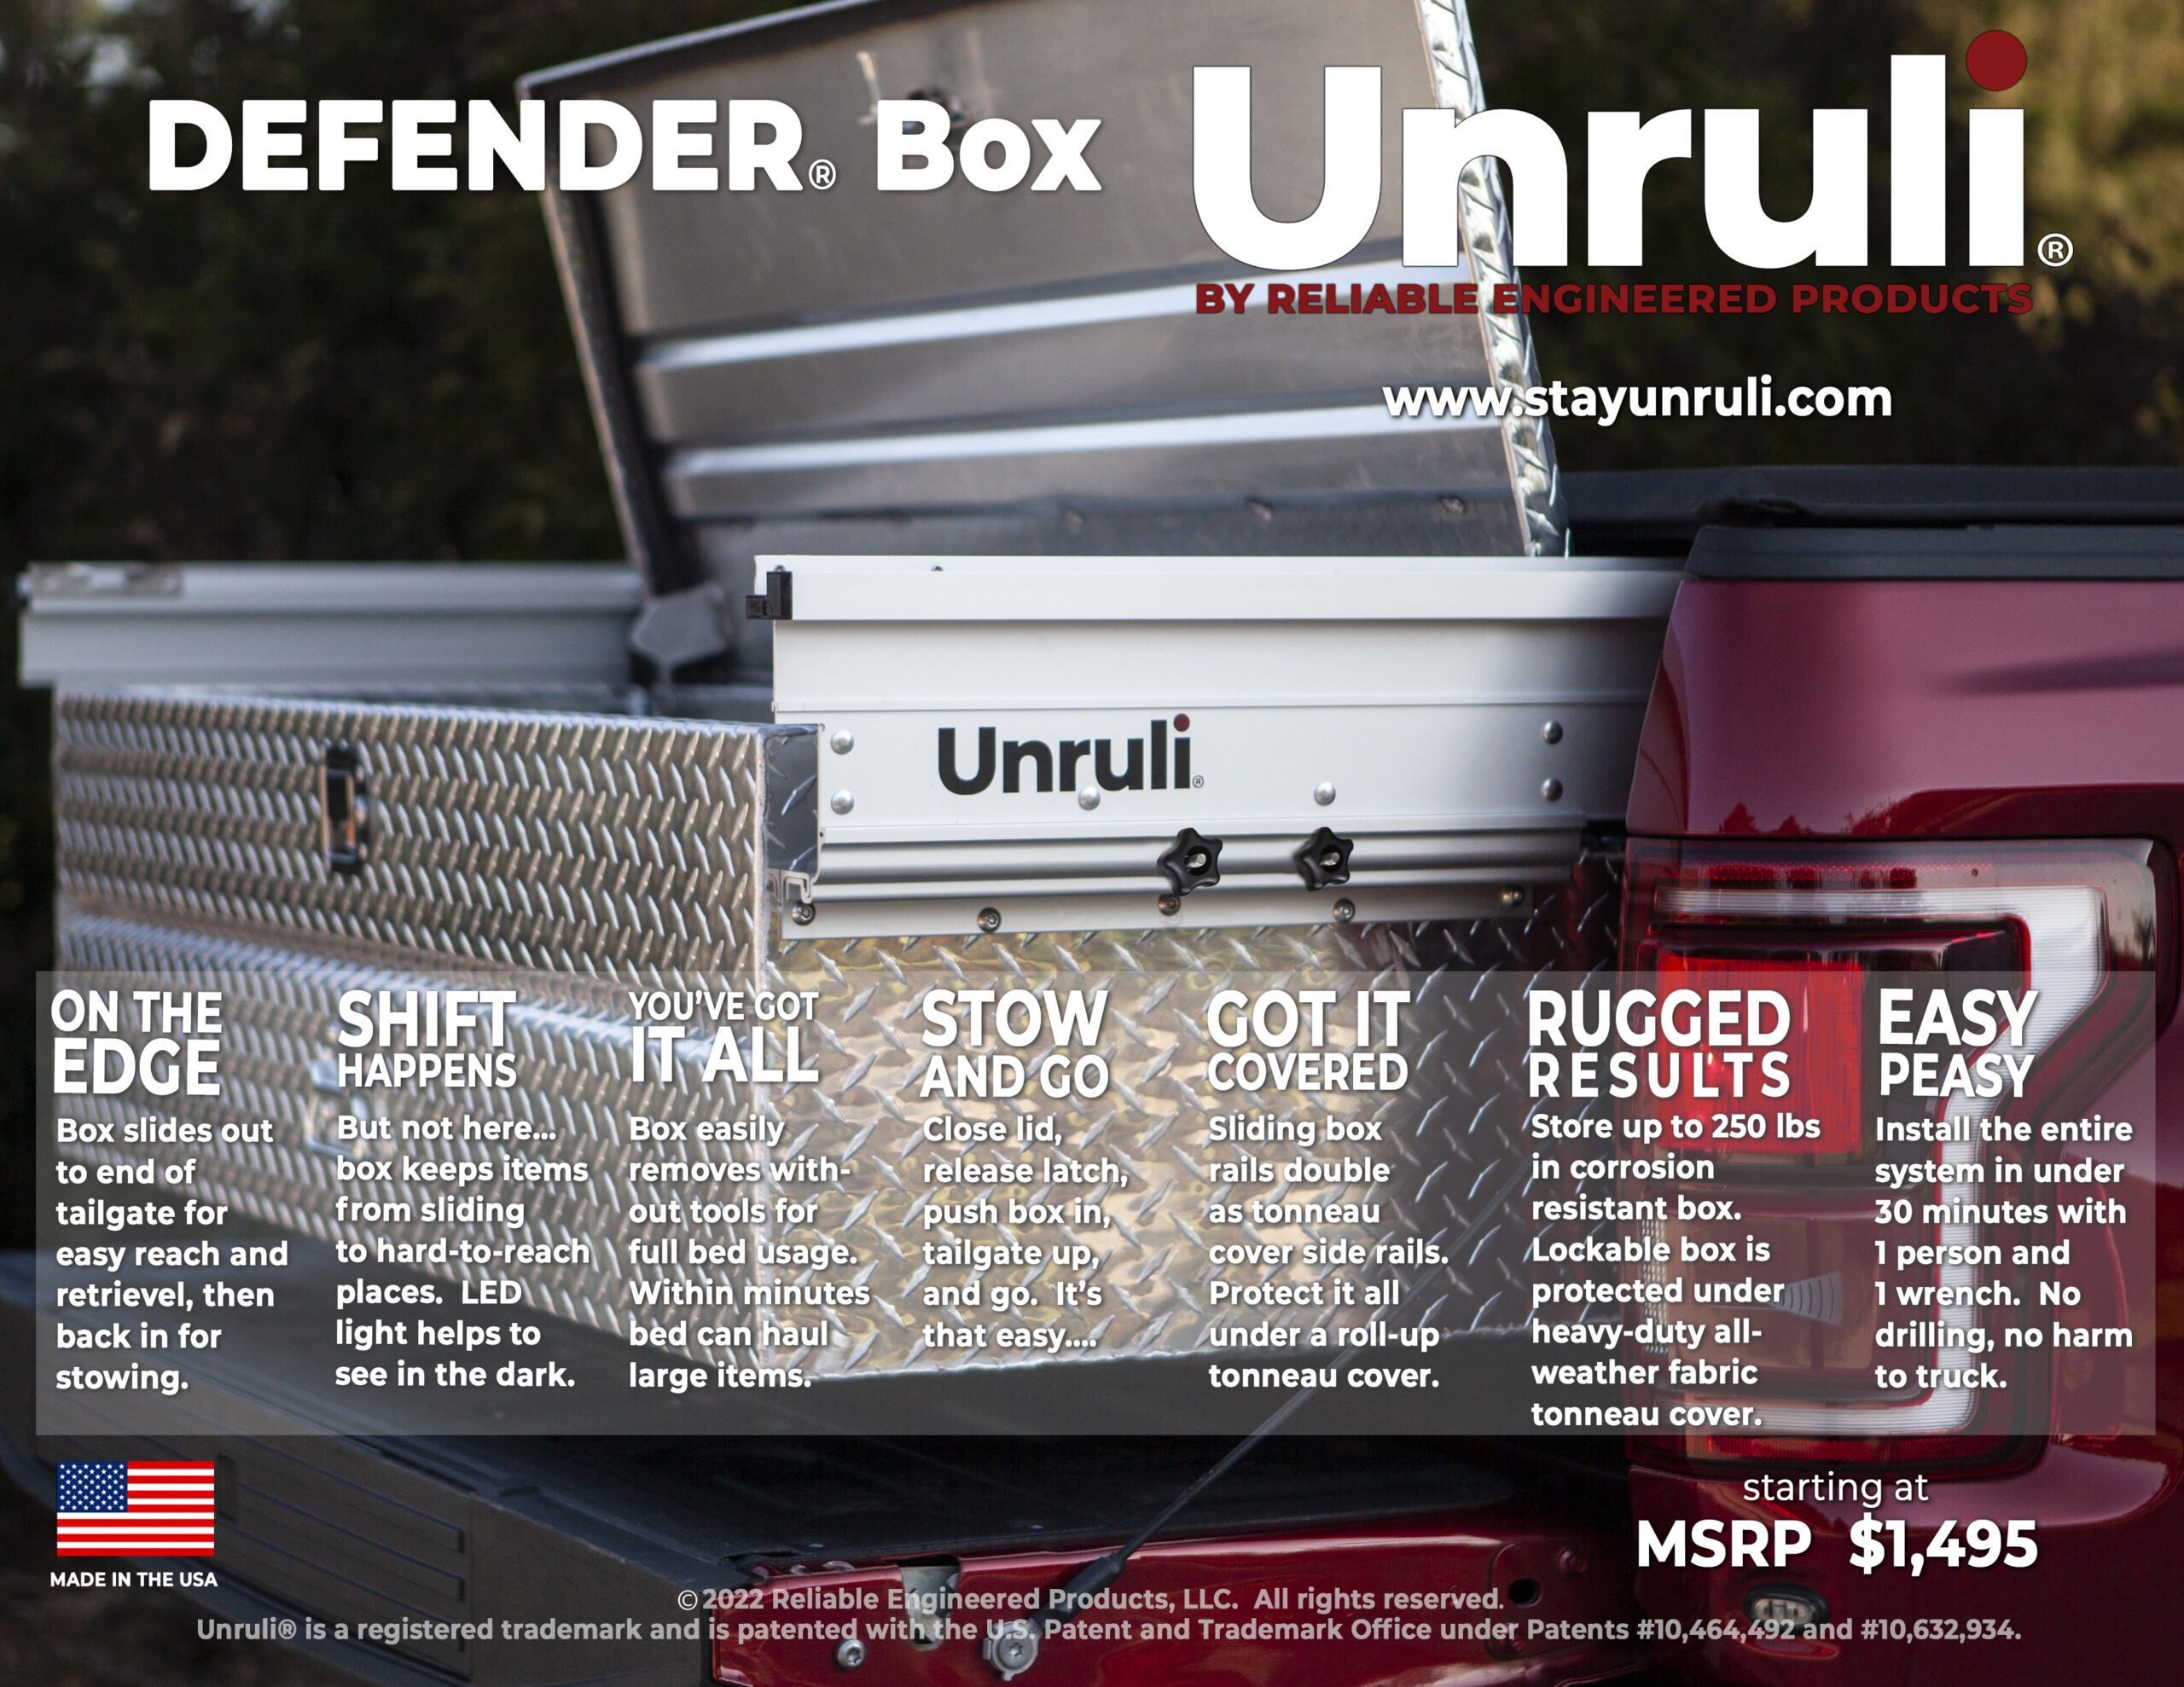 Unruli Standard Box features